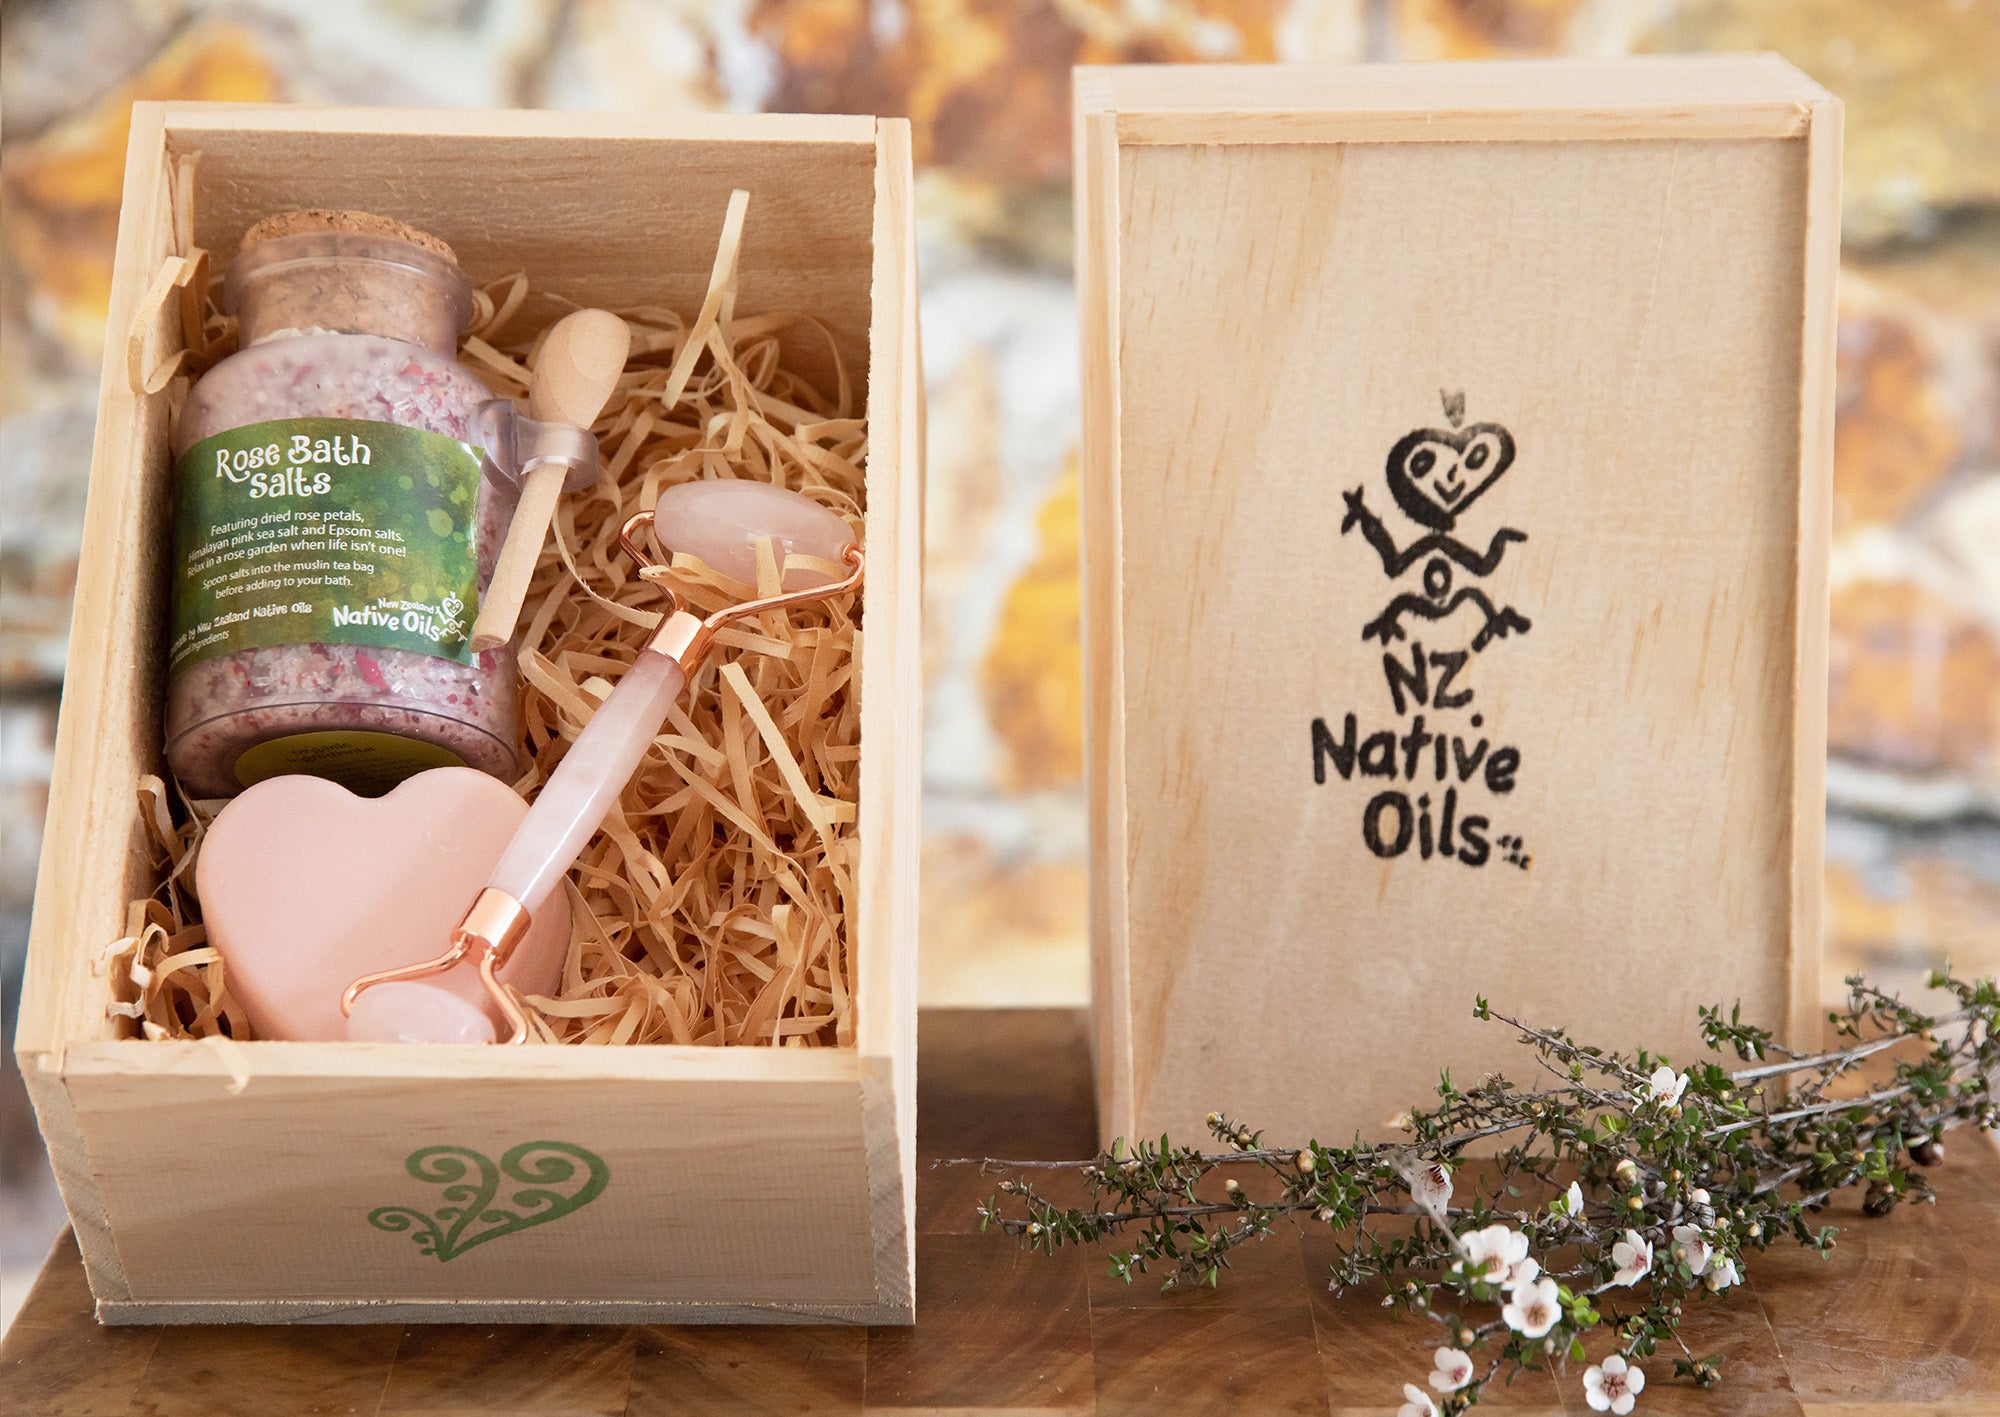 Rose Gift Box-NZ Native Oils Ltd